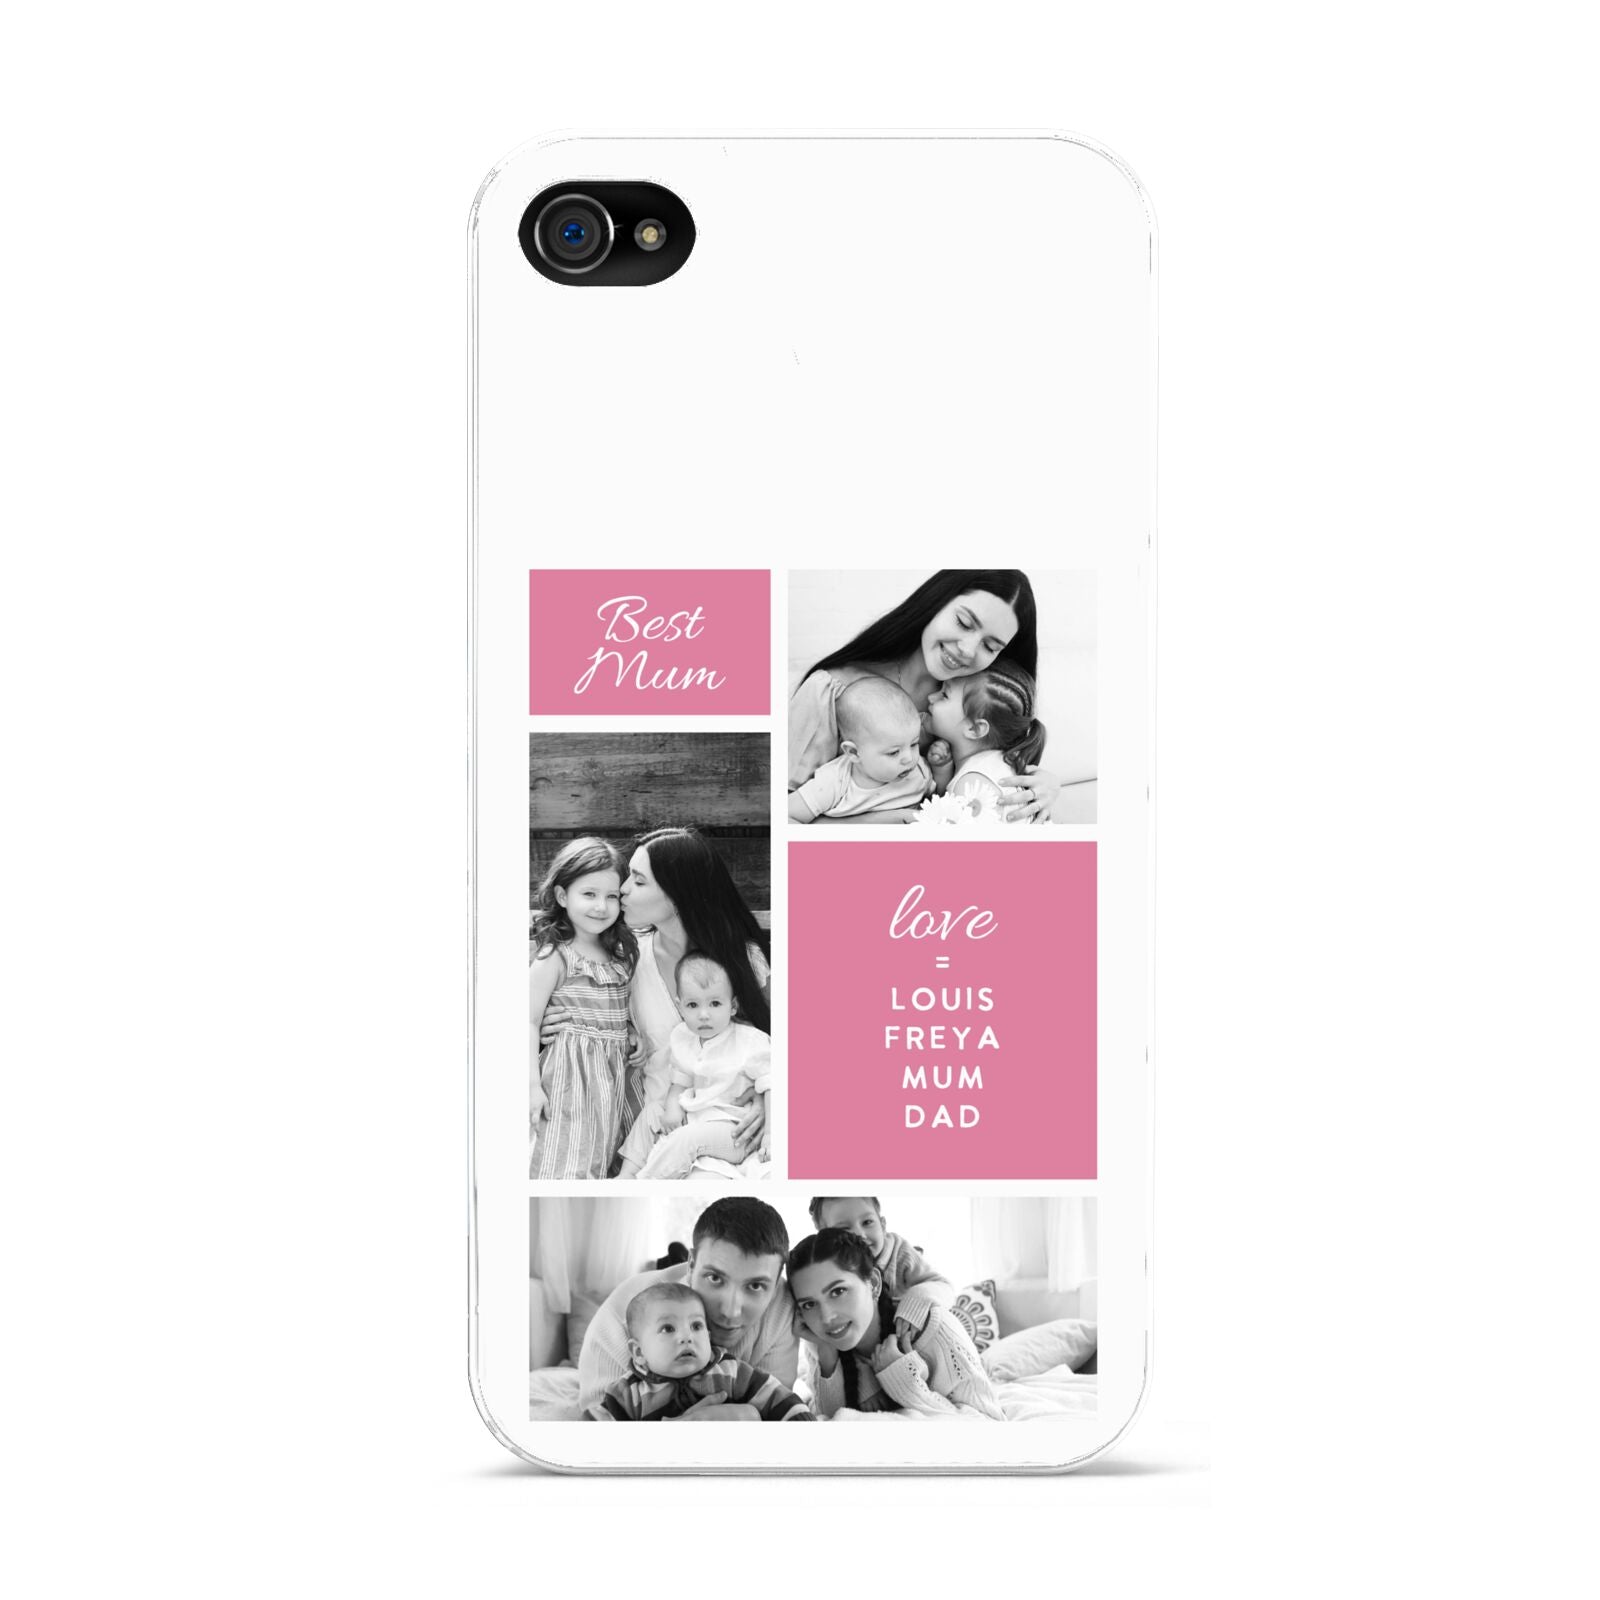 Best Mum Photo Collage Personalised Apple iPhone 4s Case